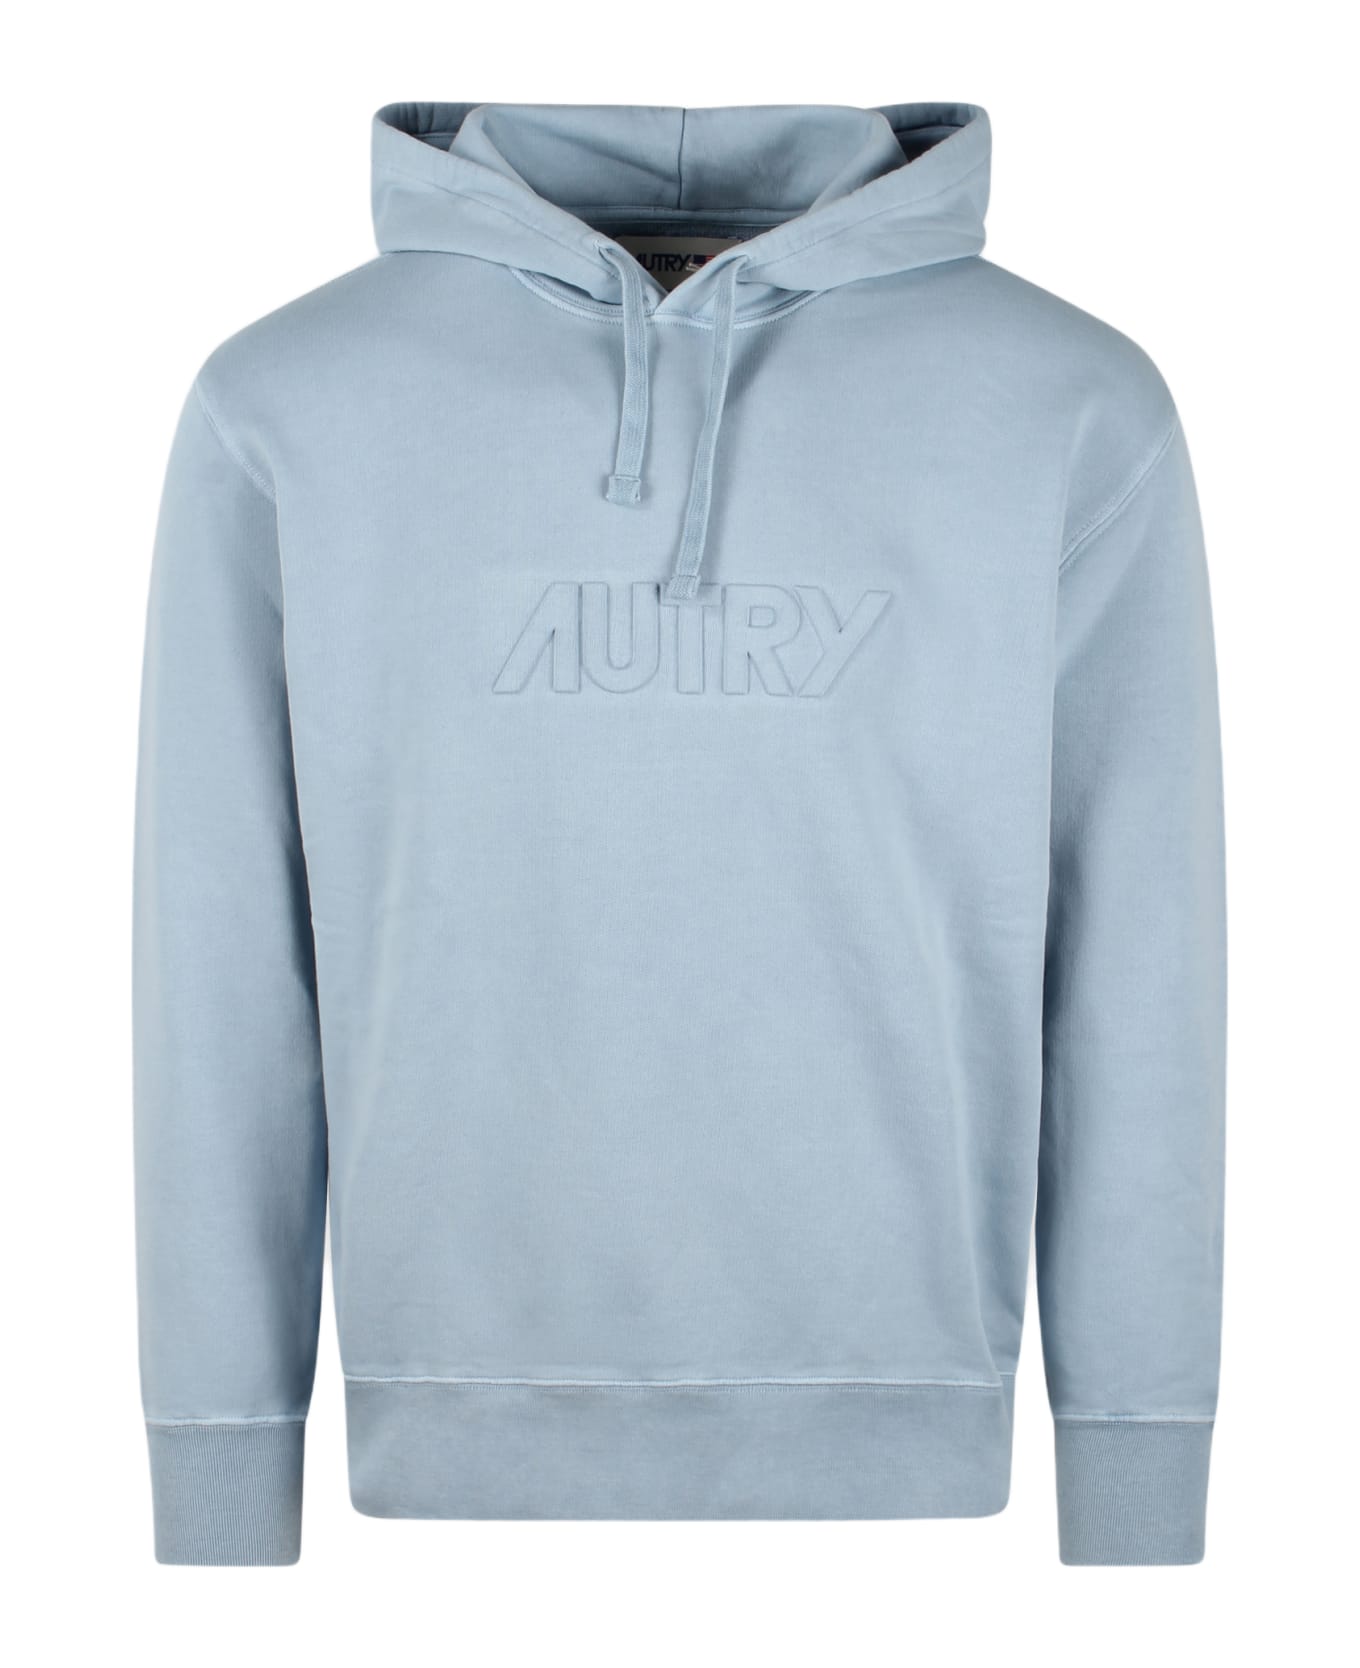 Autry Cotton Hooded Sweatshirt - Blue